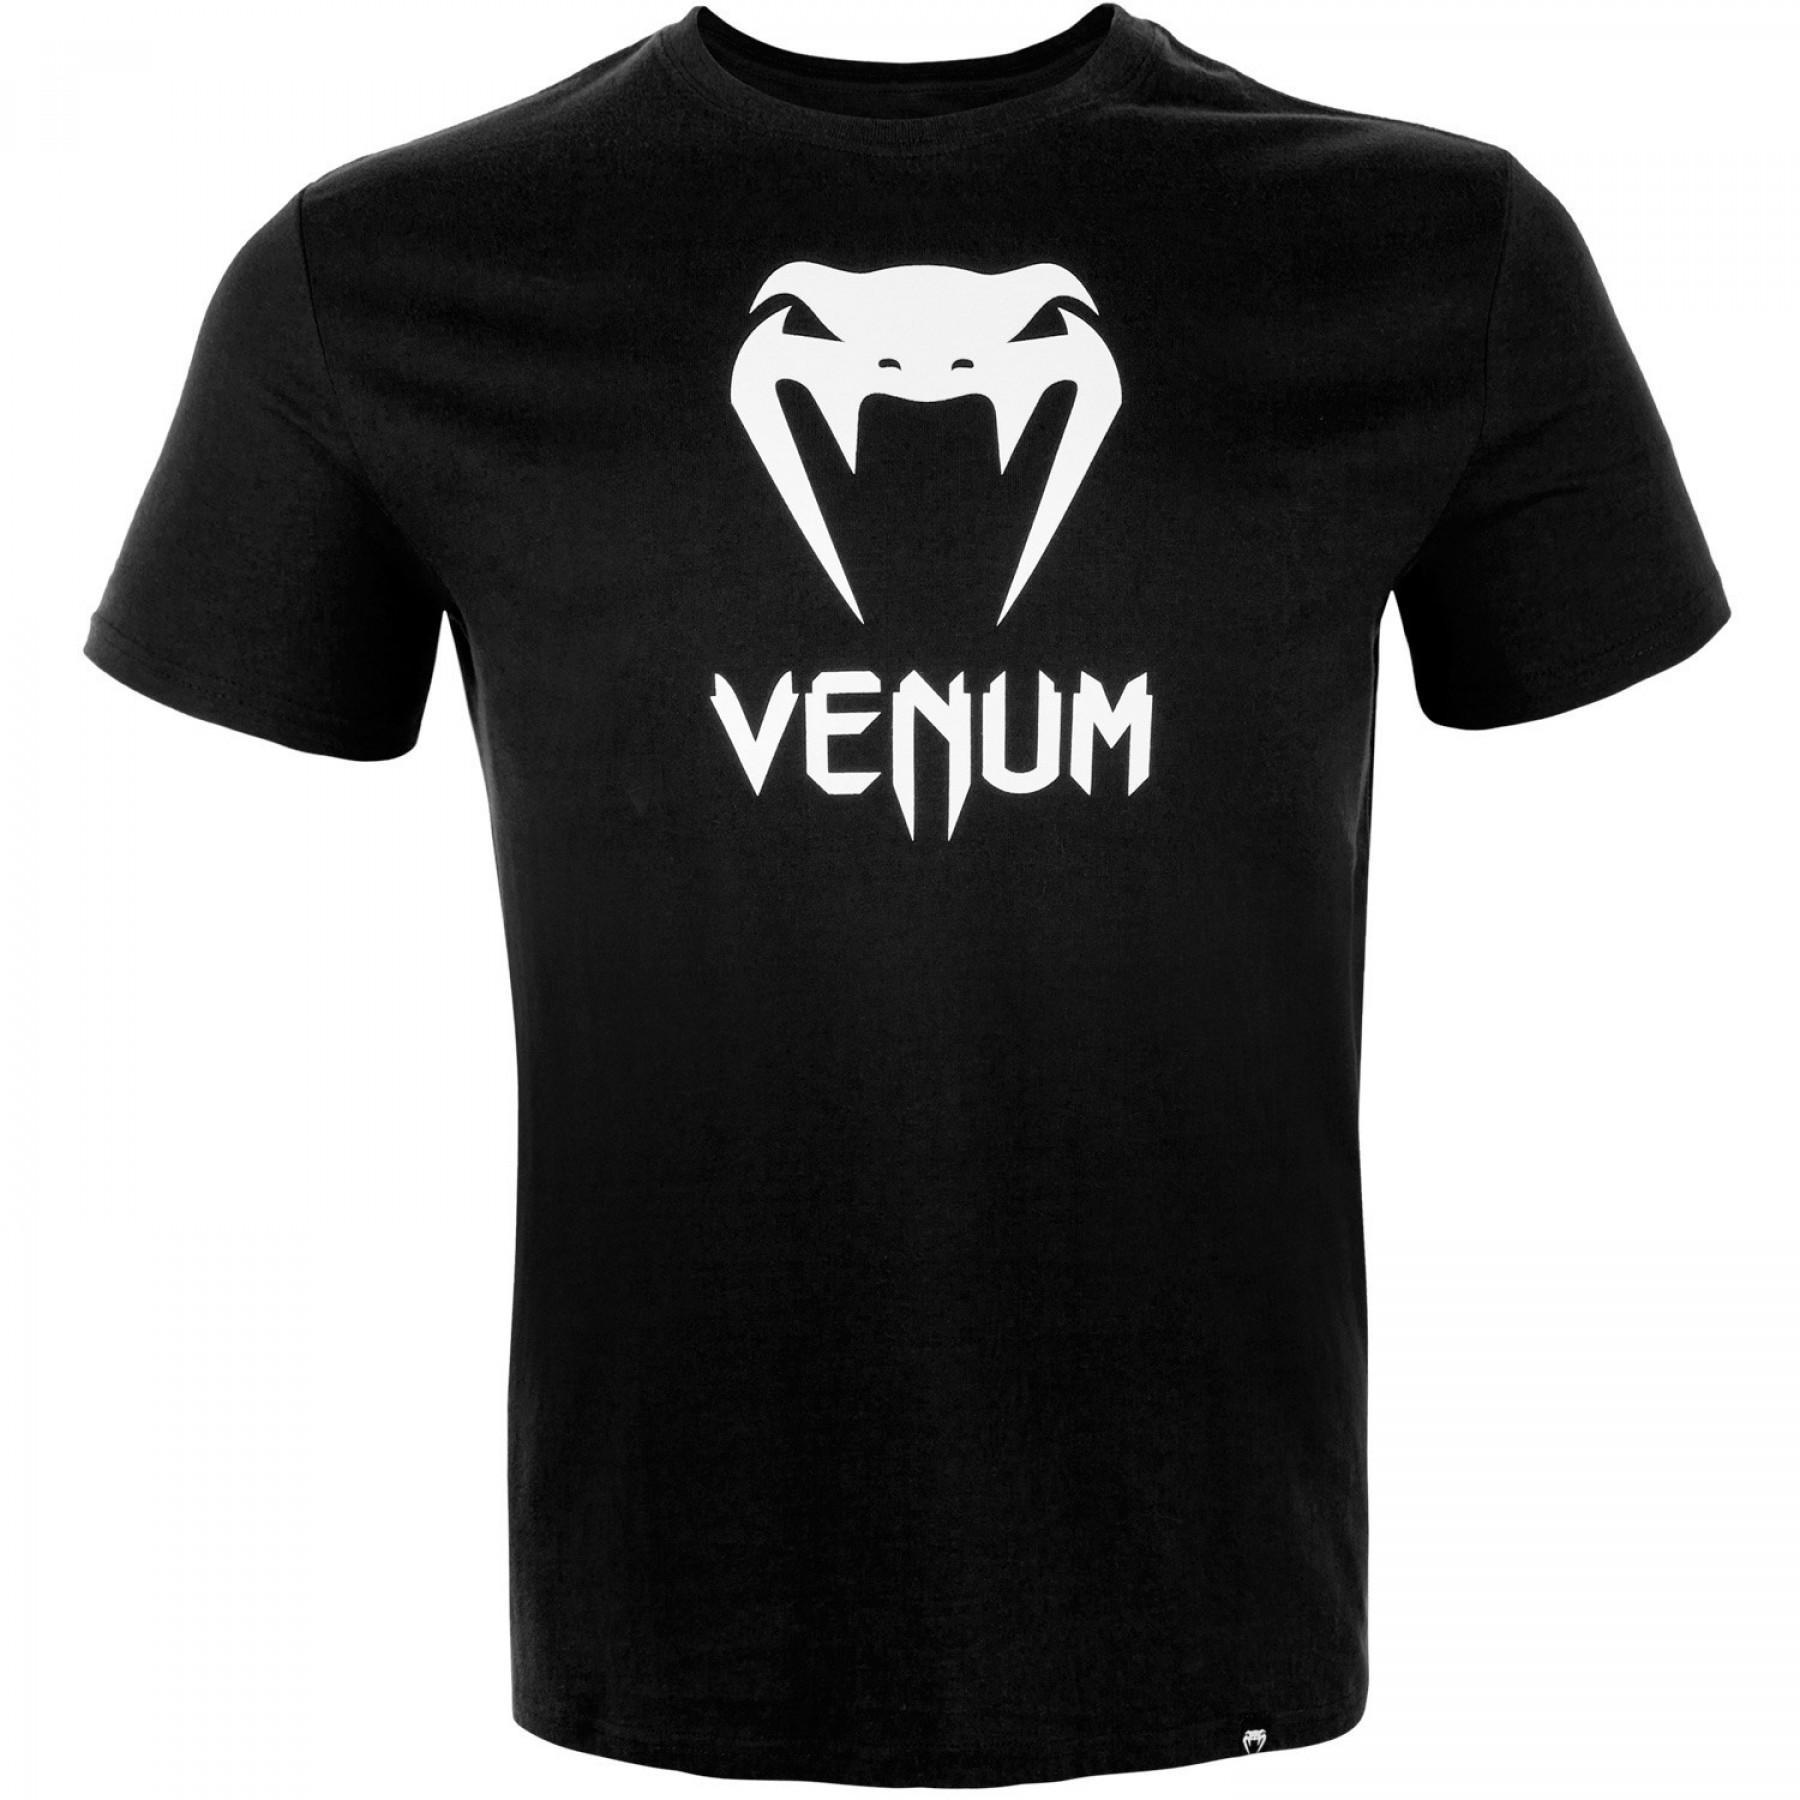 Kinder-T-Shirt Venum Classic